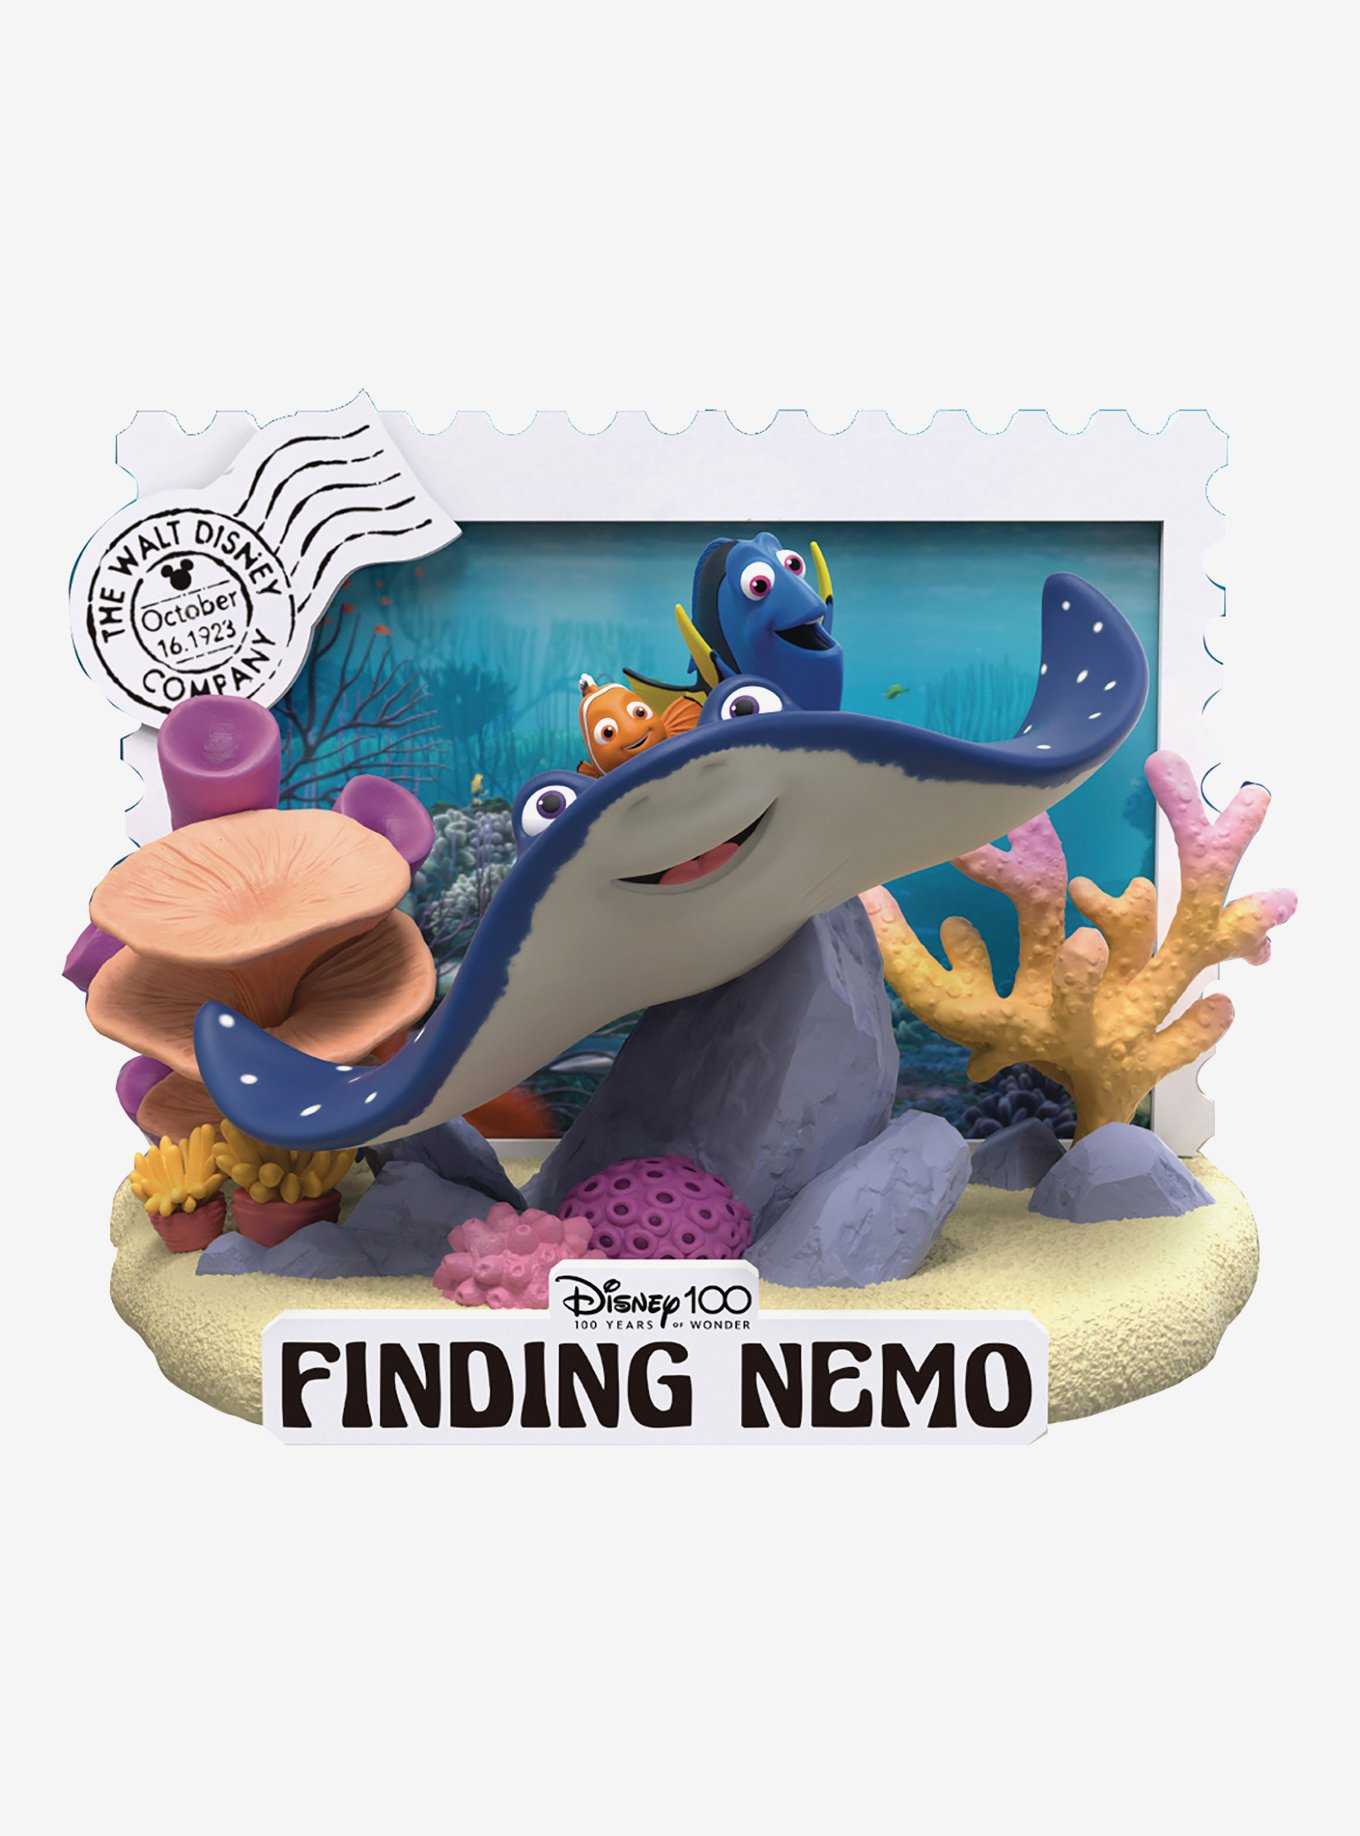 Beast Kingdom Disney 100 Finding Nemo D-Stage DS-138 Statue, , hi-res